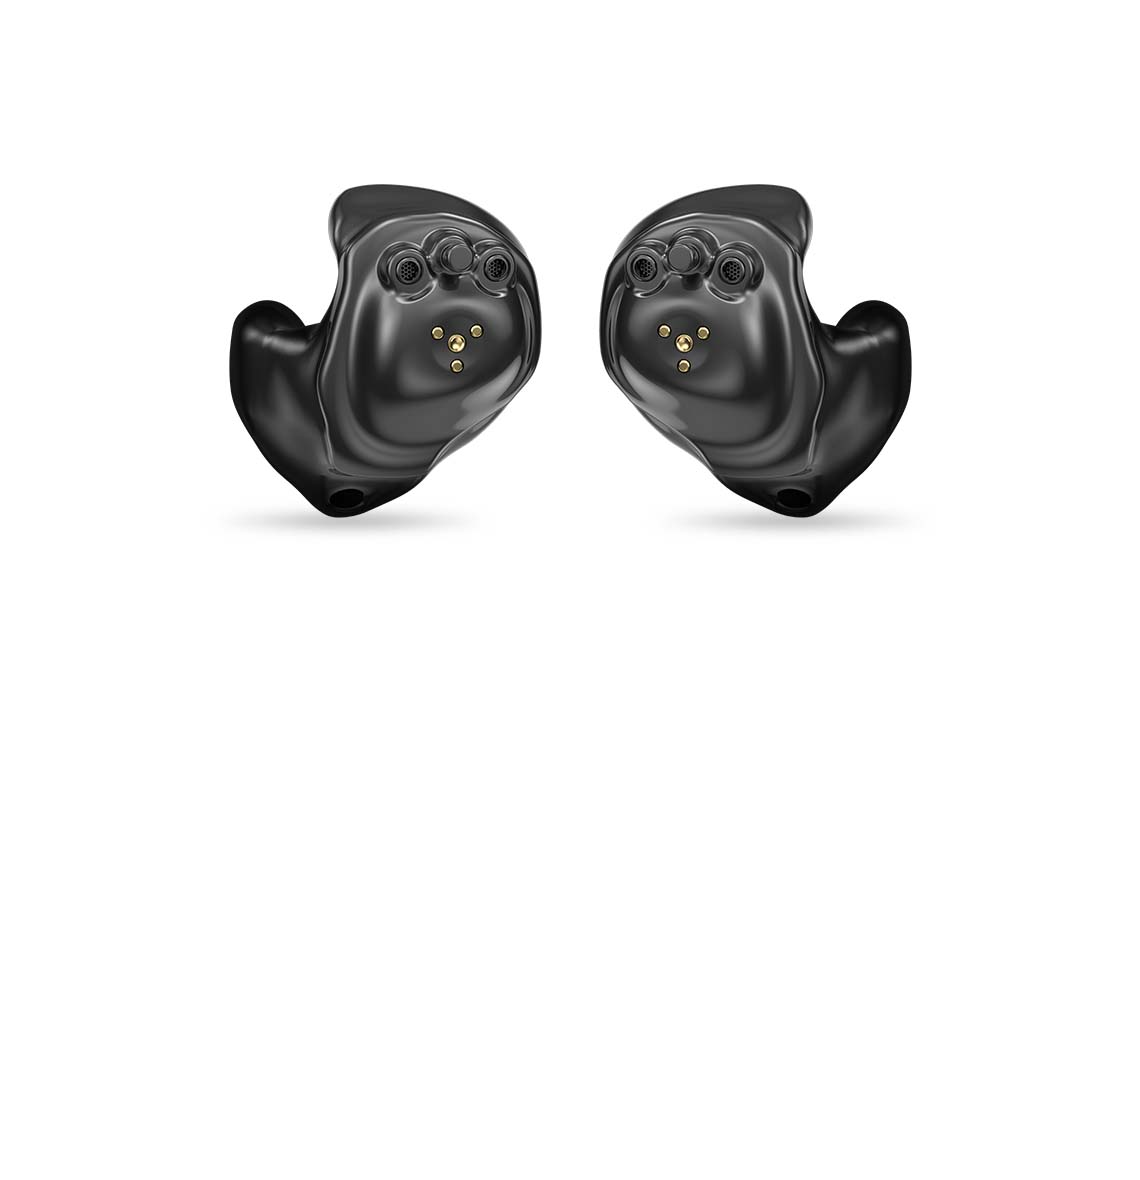 A pair of Black ITE R hearing aids